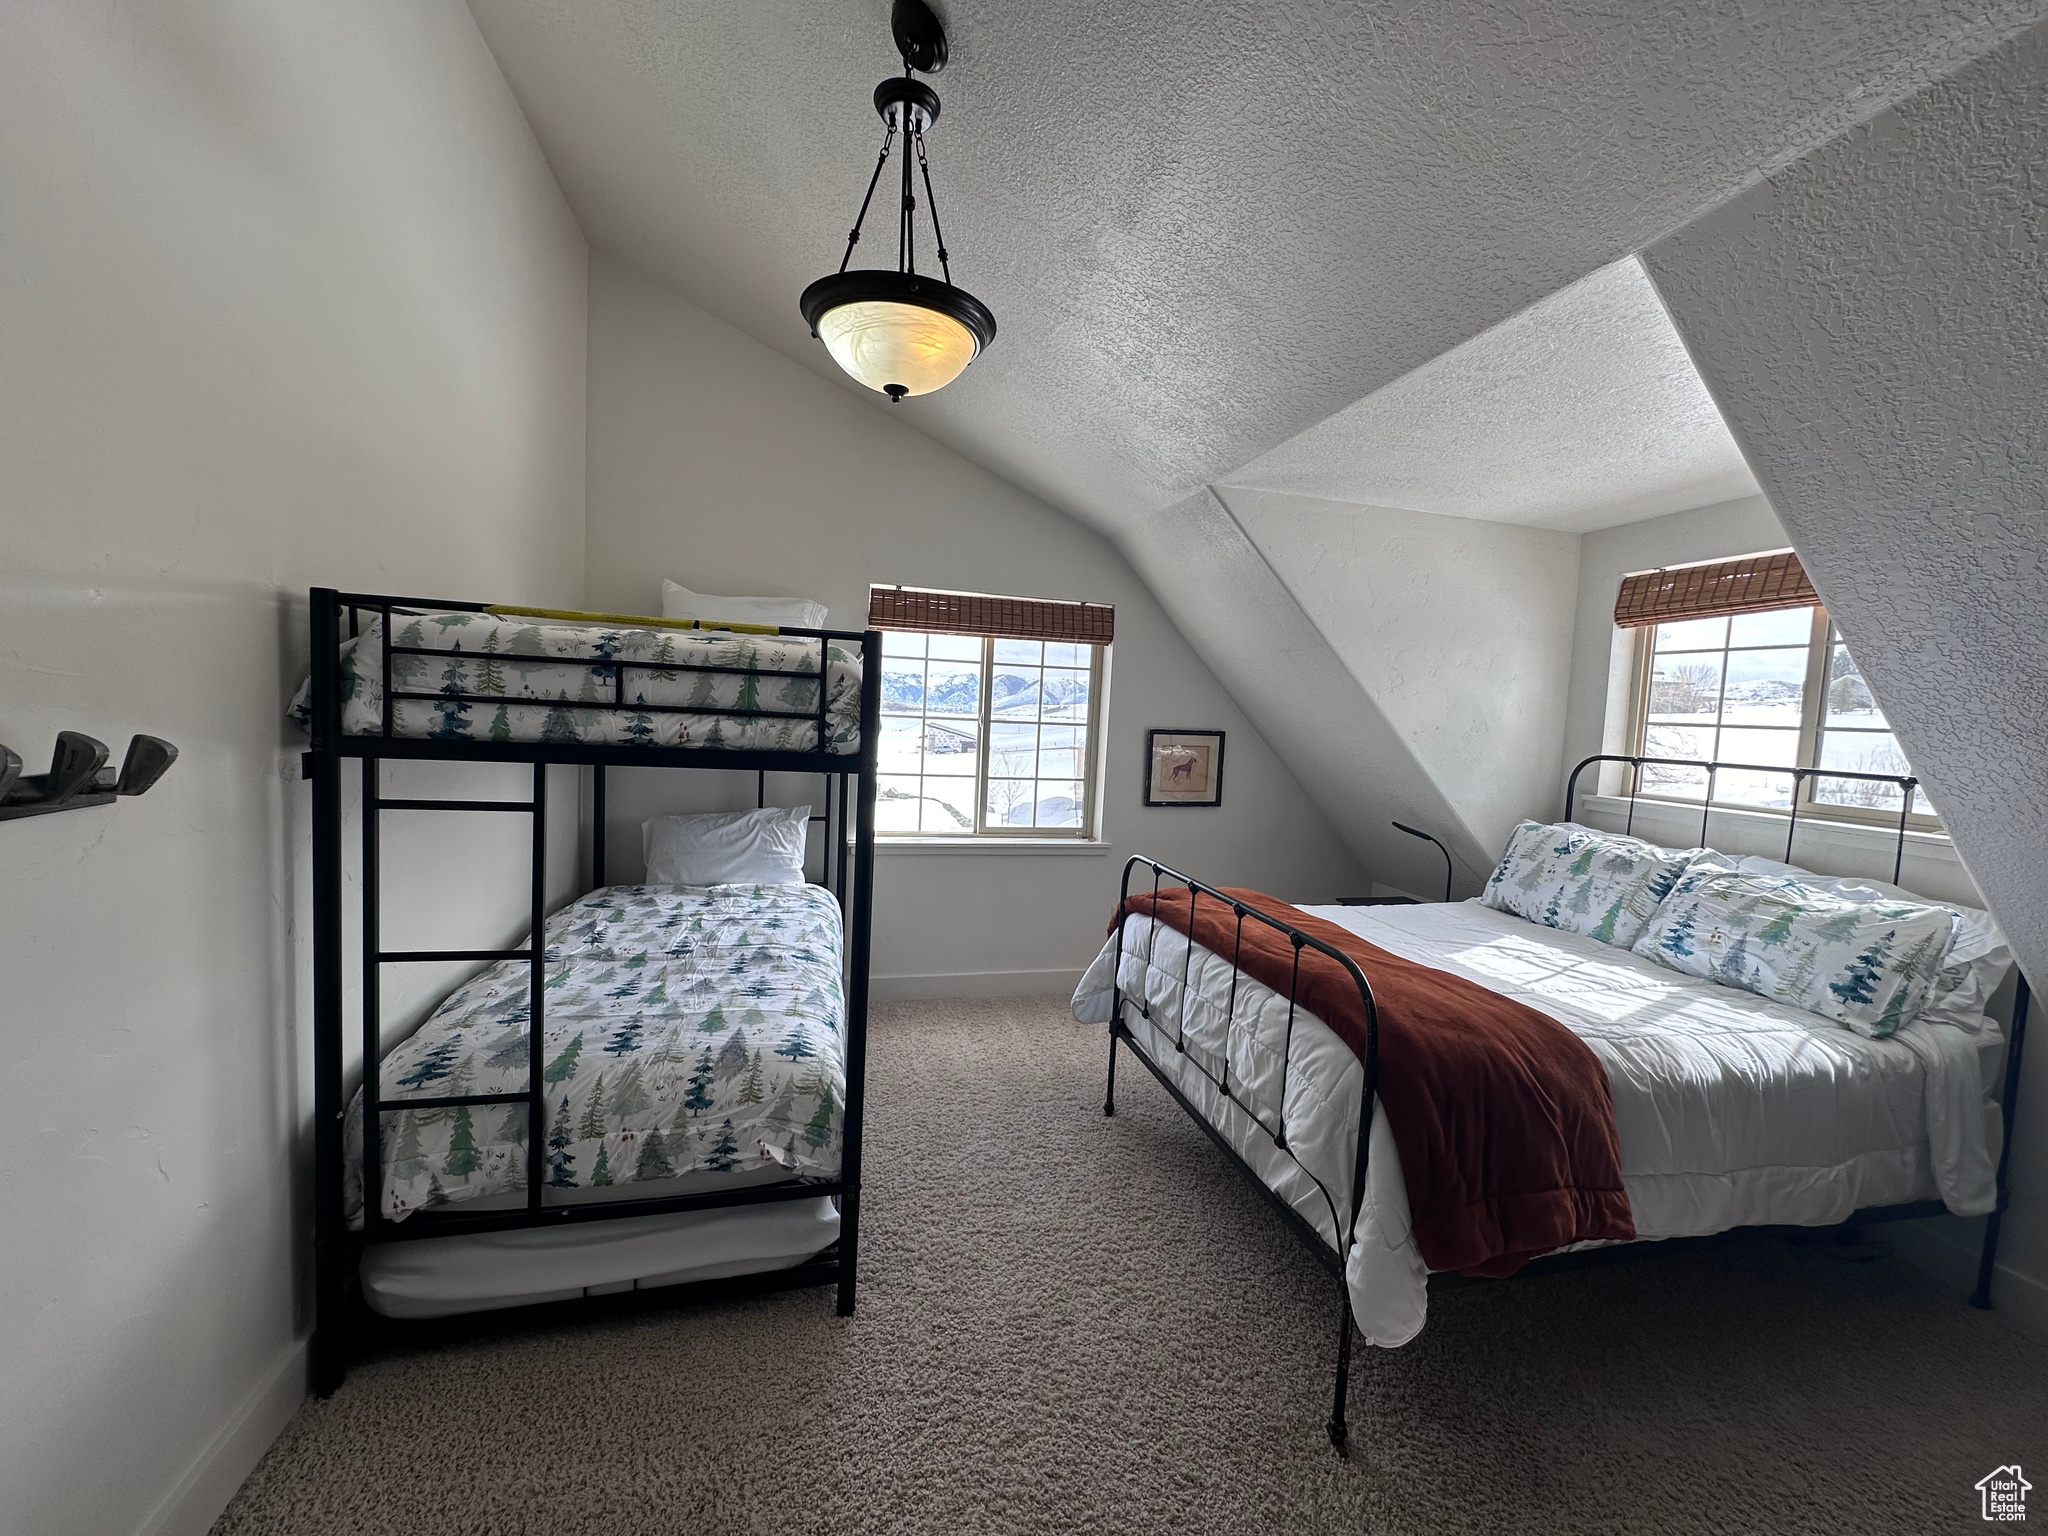 Bedroom featuring carpet floors, multiple windows, a vaulted ceiling